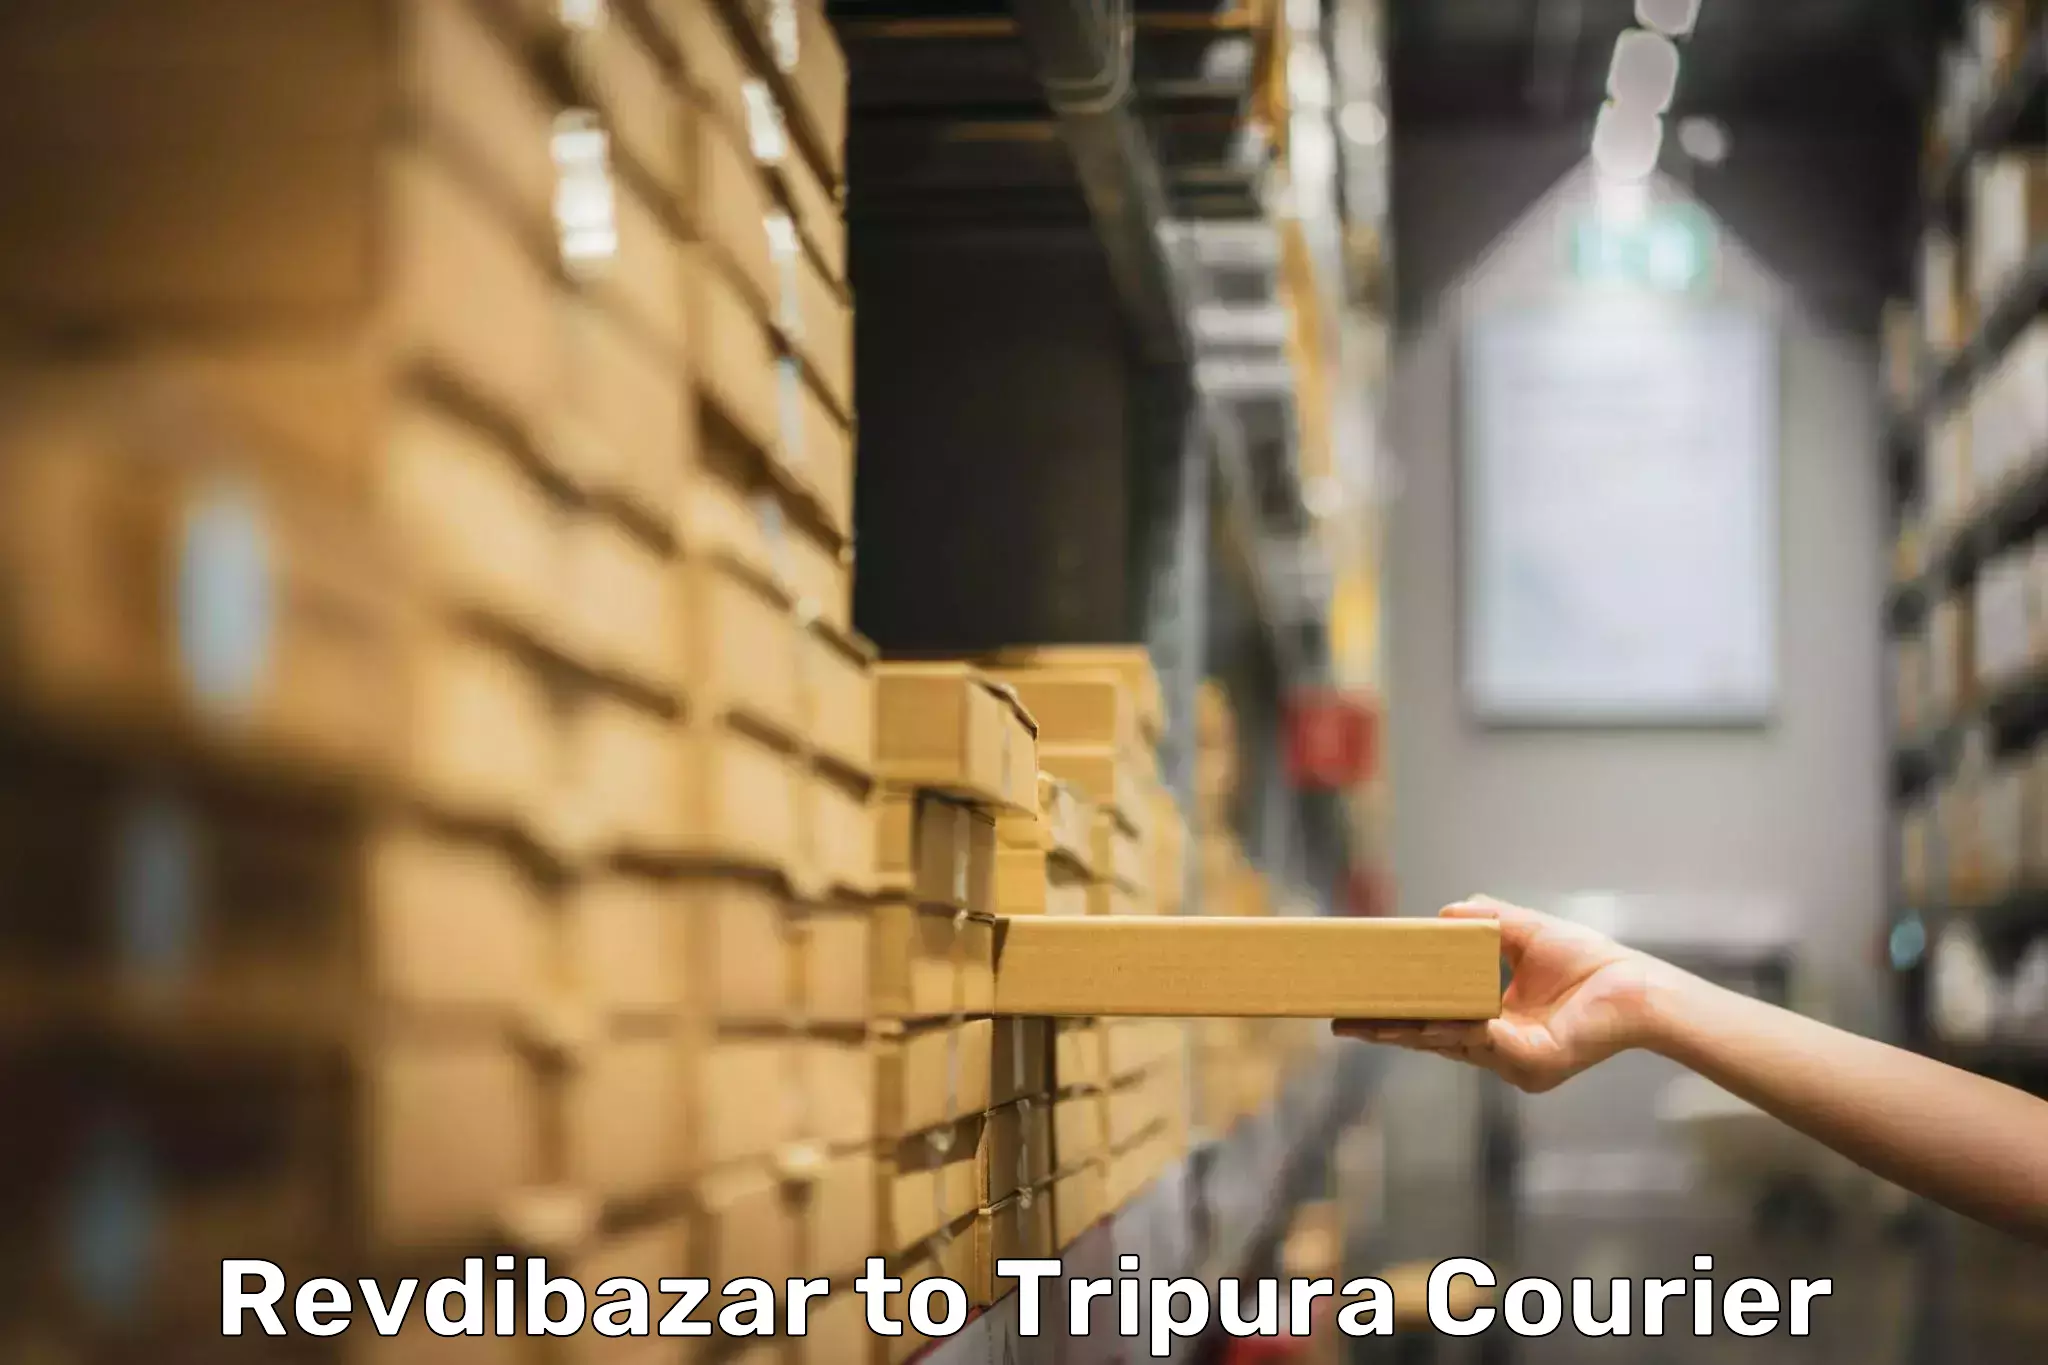 Hassle-free luggage shipping Revdibazar to Udaipur Tripura